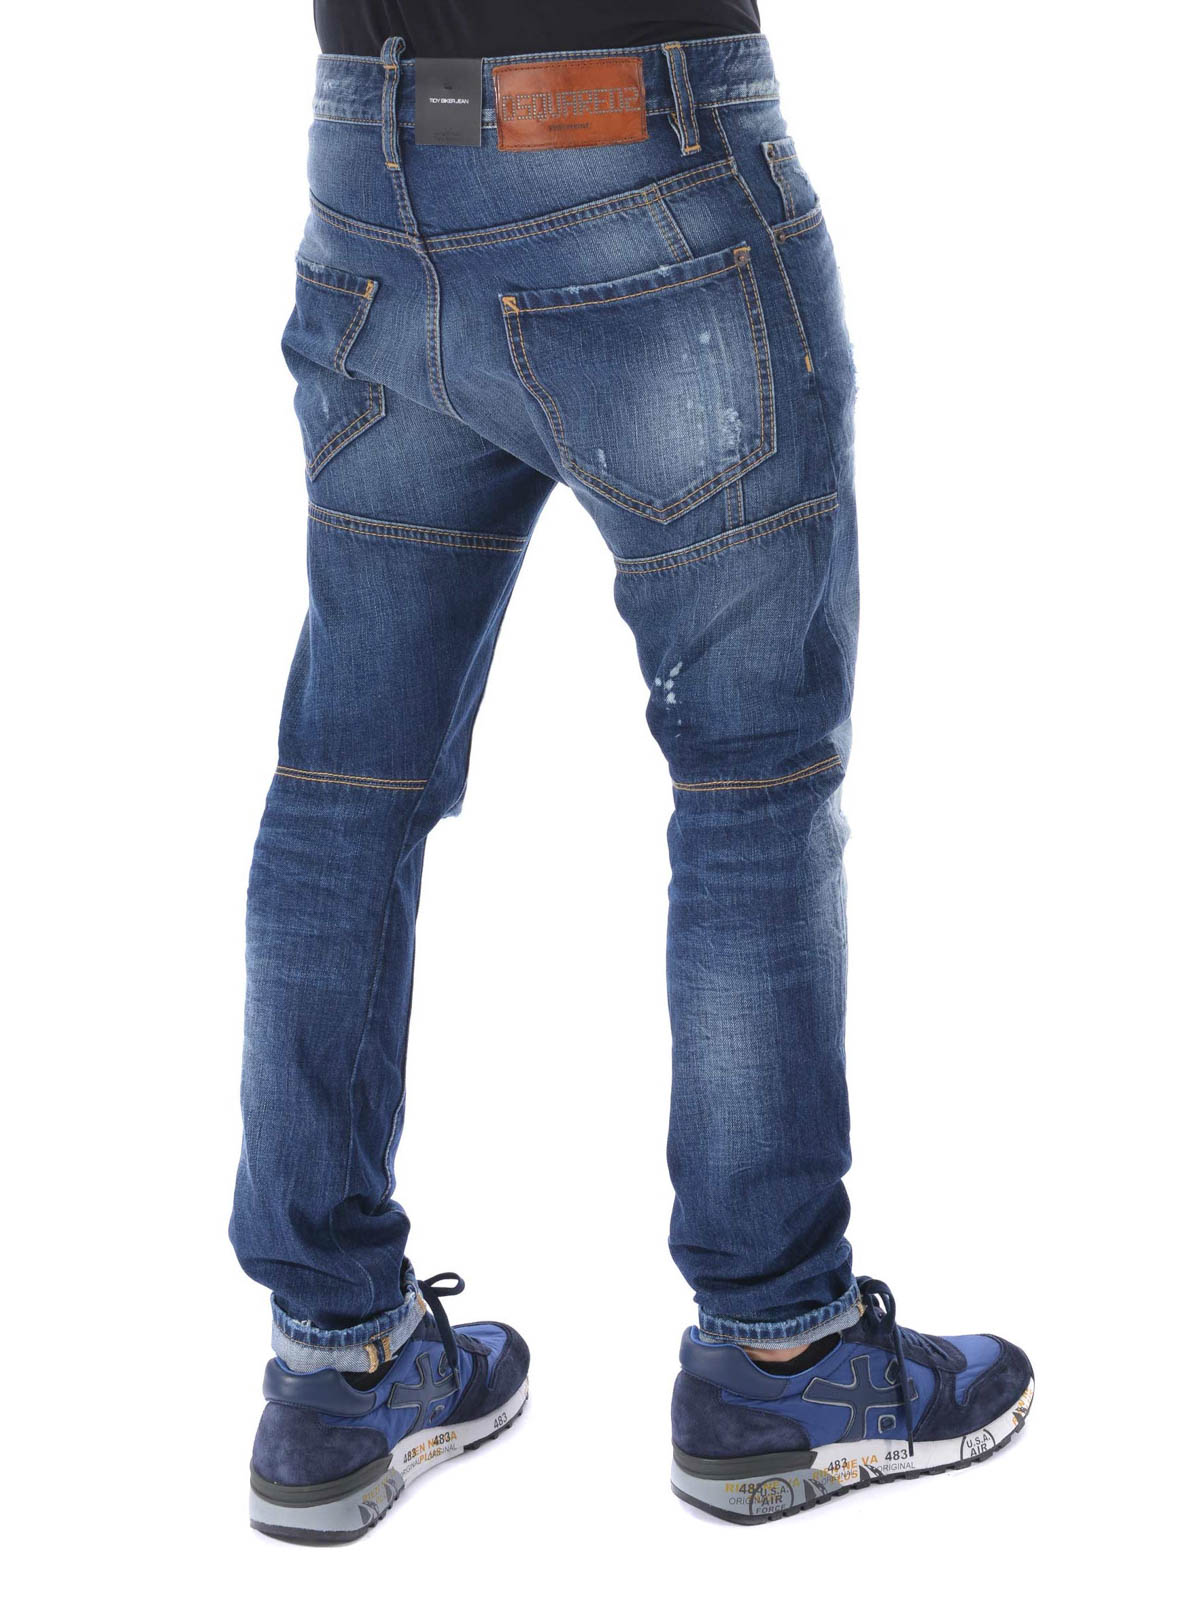 jeans dsquared biker